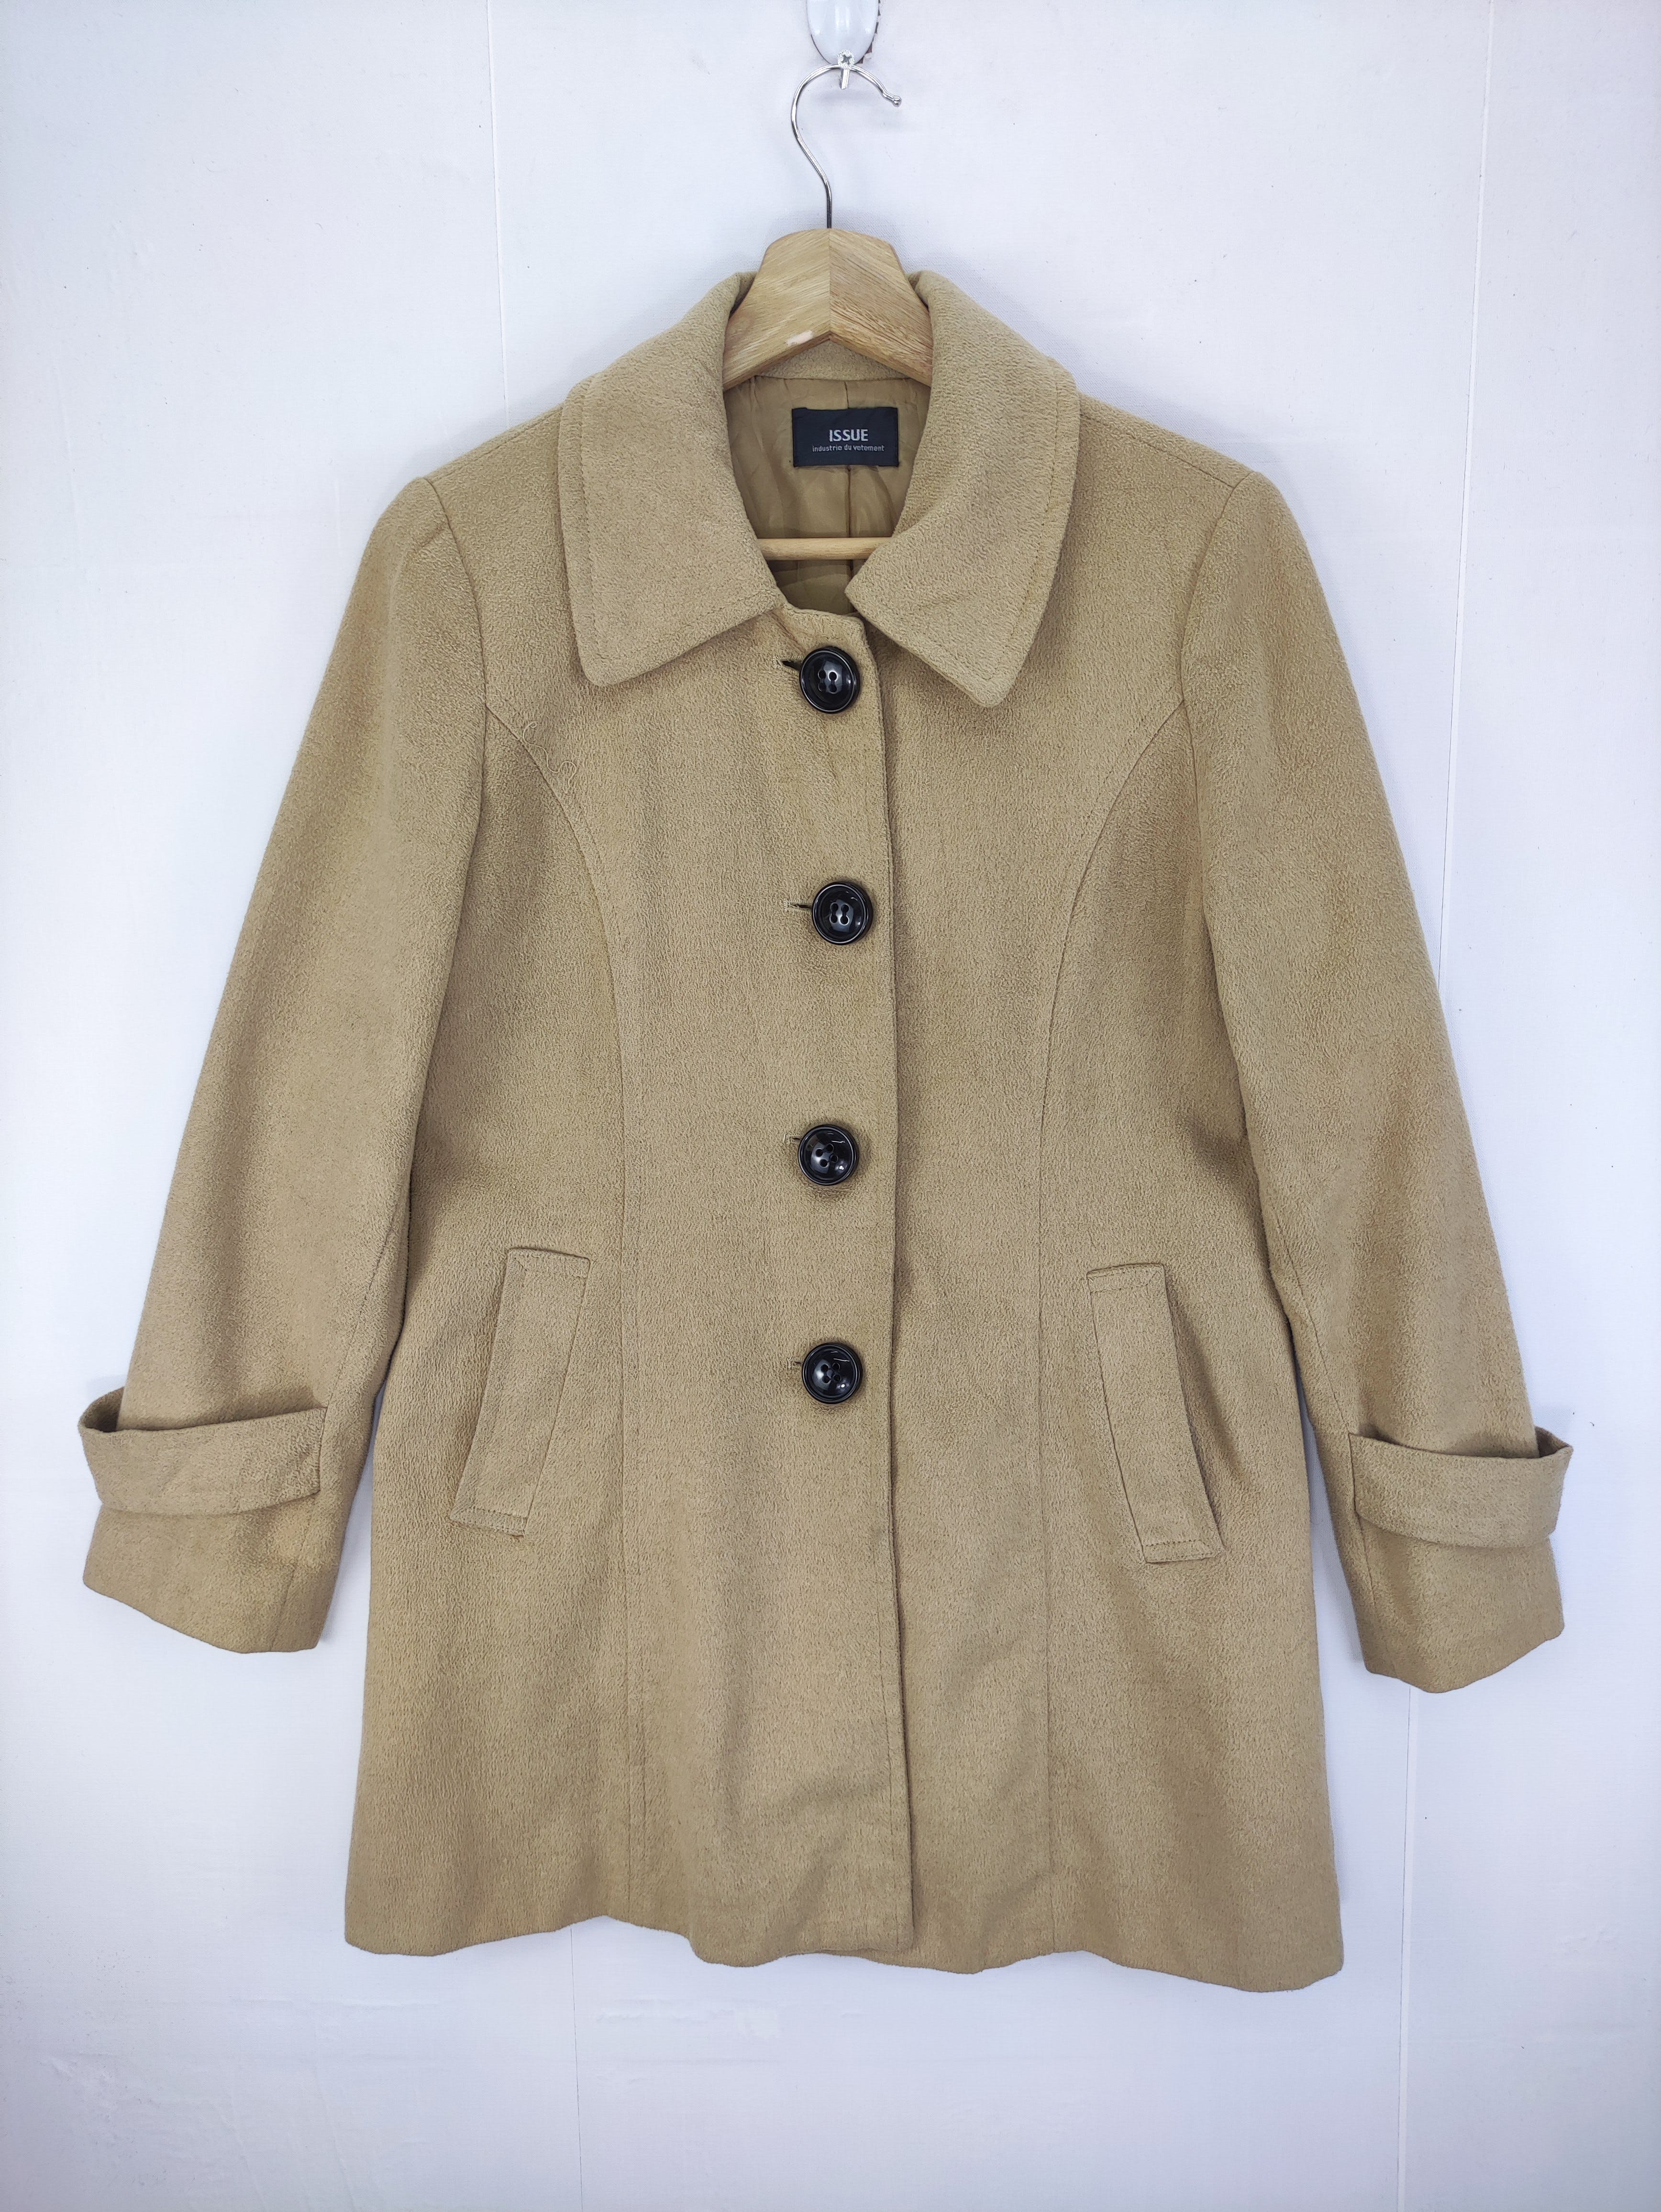 Vintage - Issue Industrie Du Vetement Coat Jacket - 1